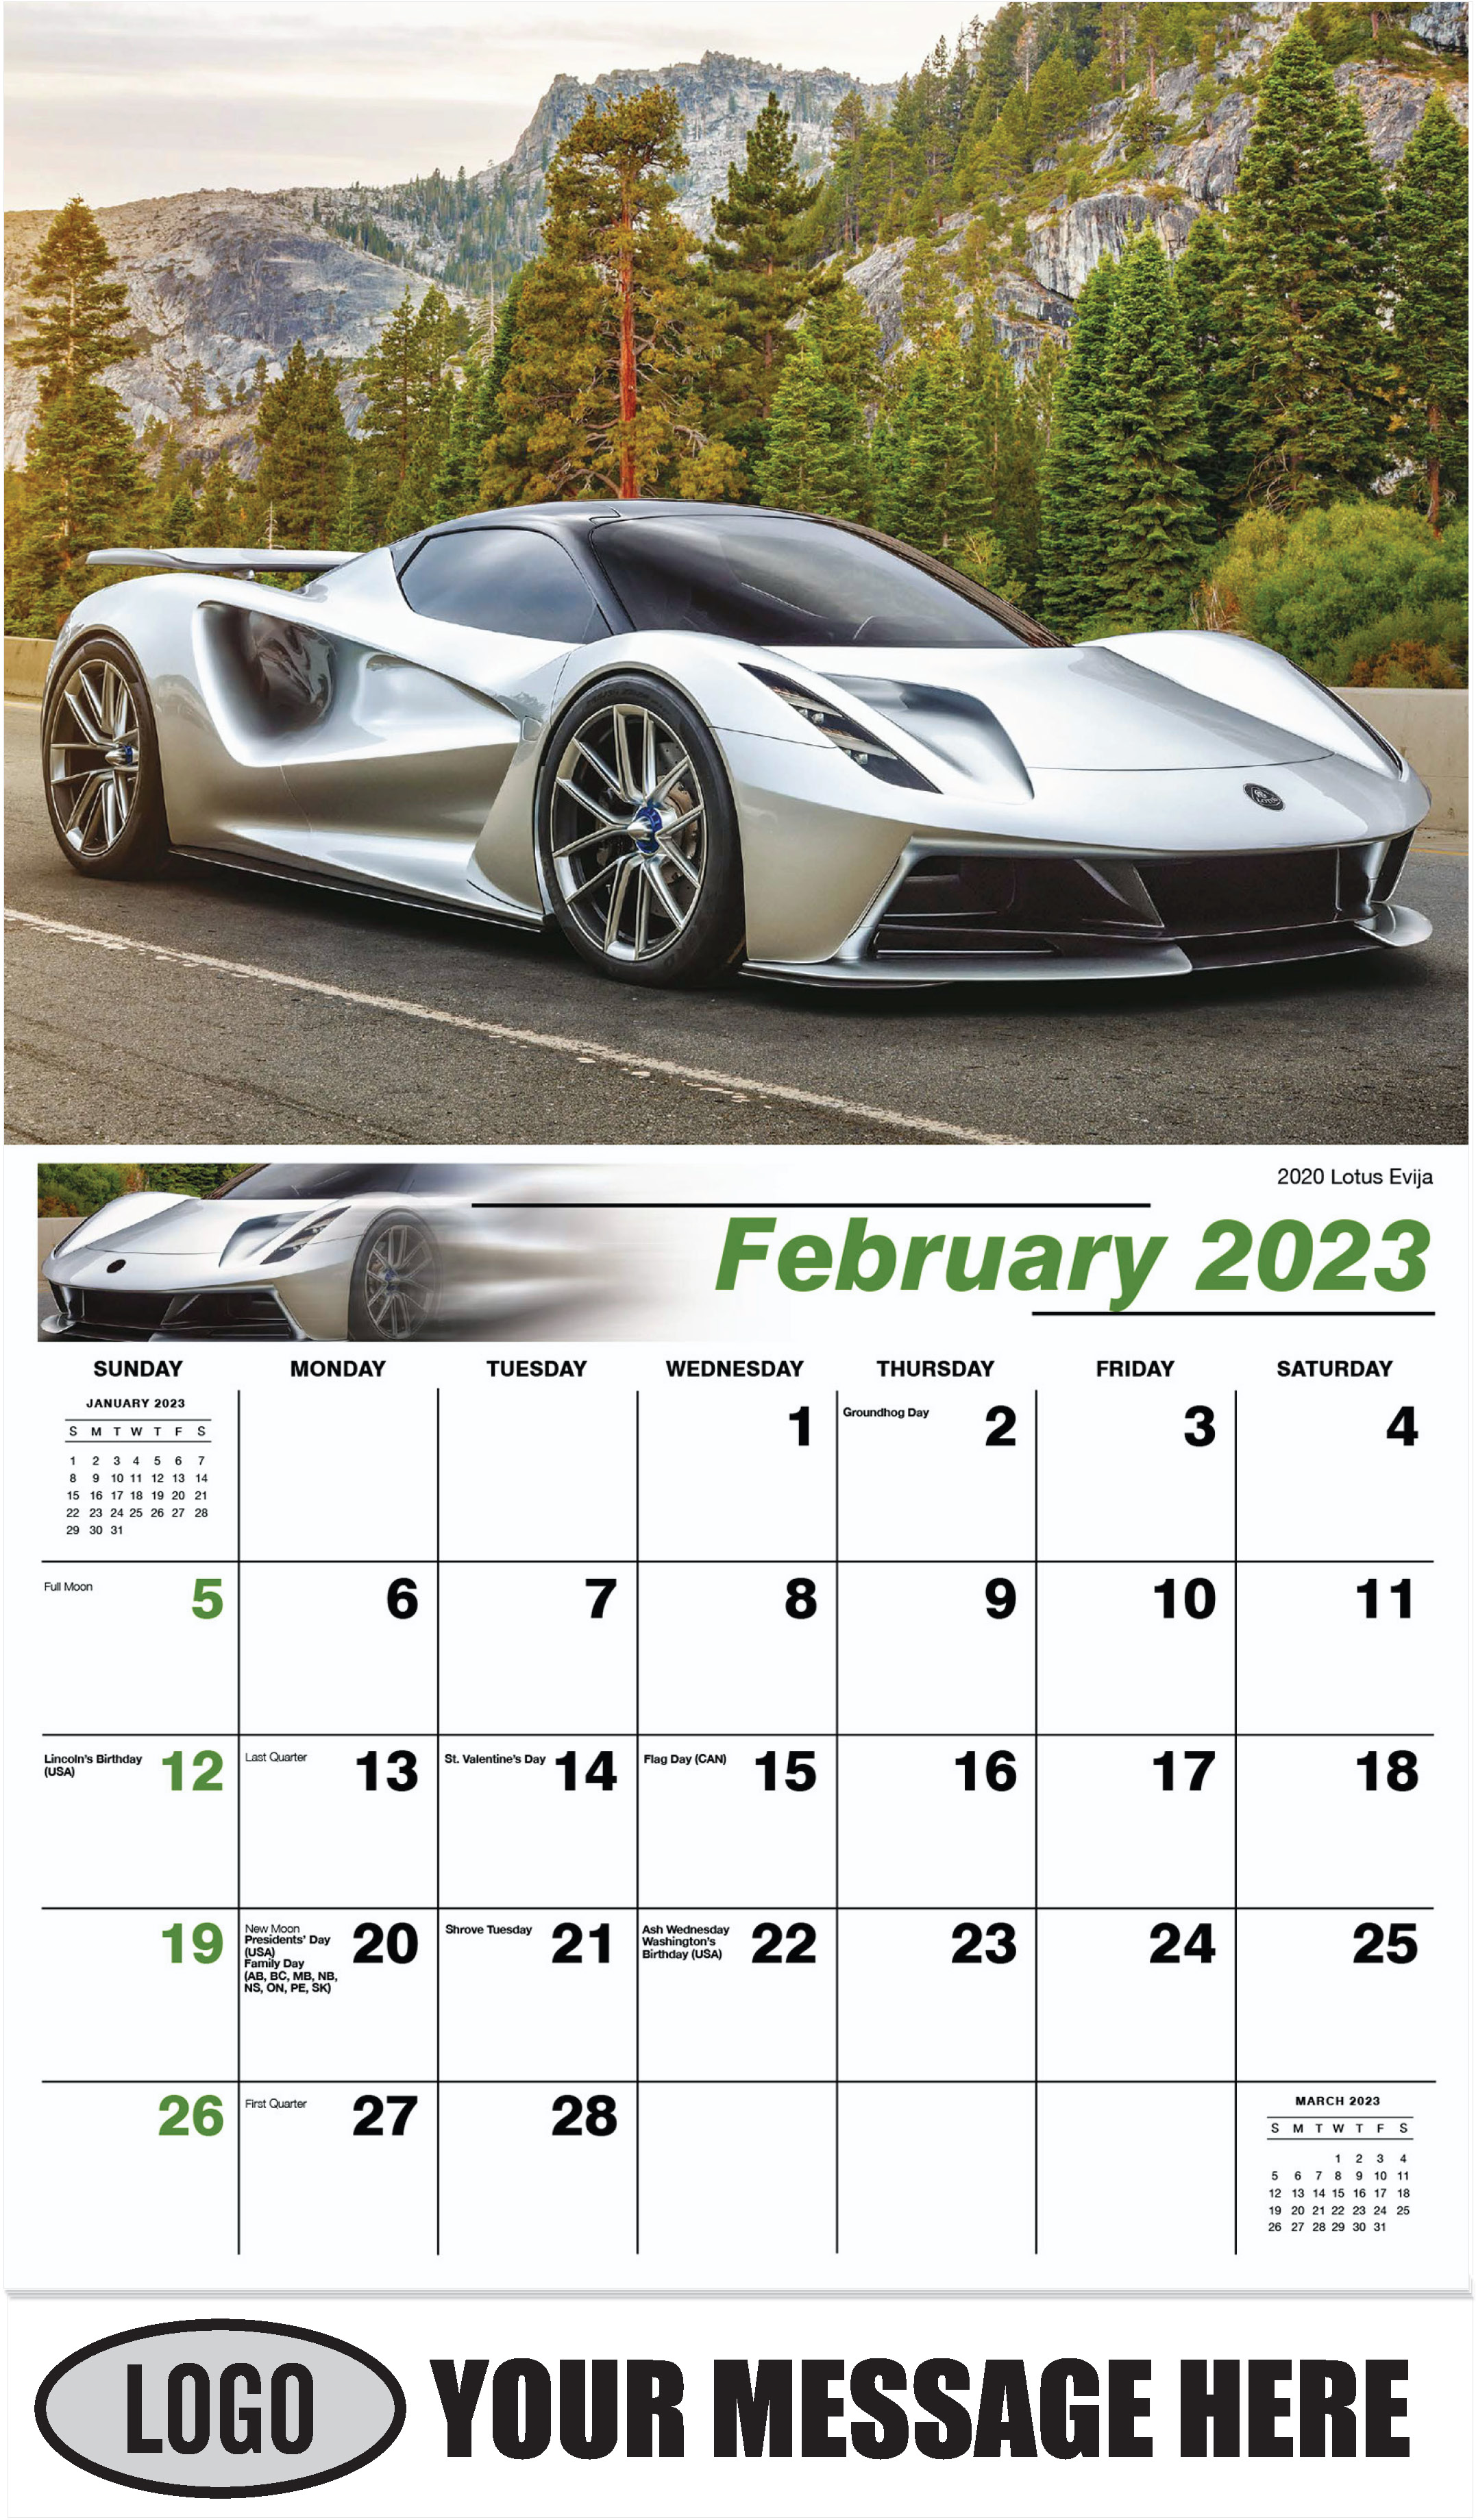 2020 Lotus Evija - February - Exotic Cars 2023 Promotional Calendar